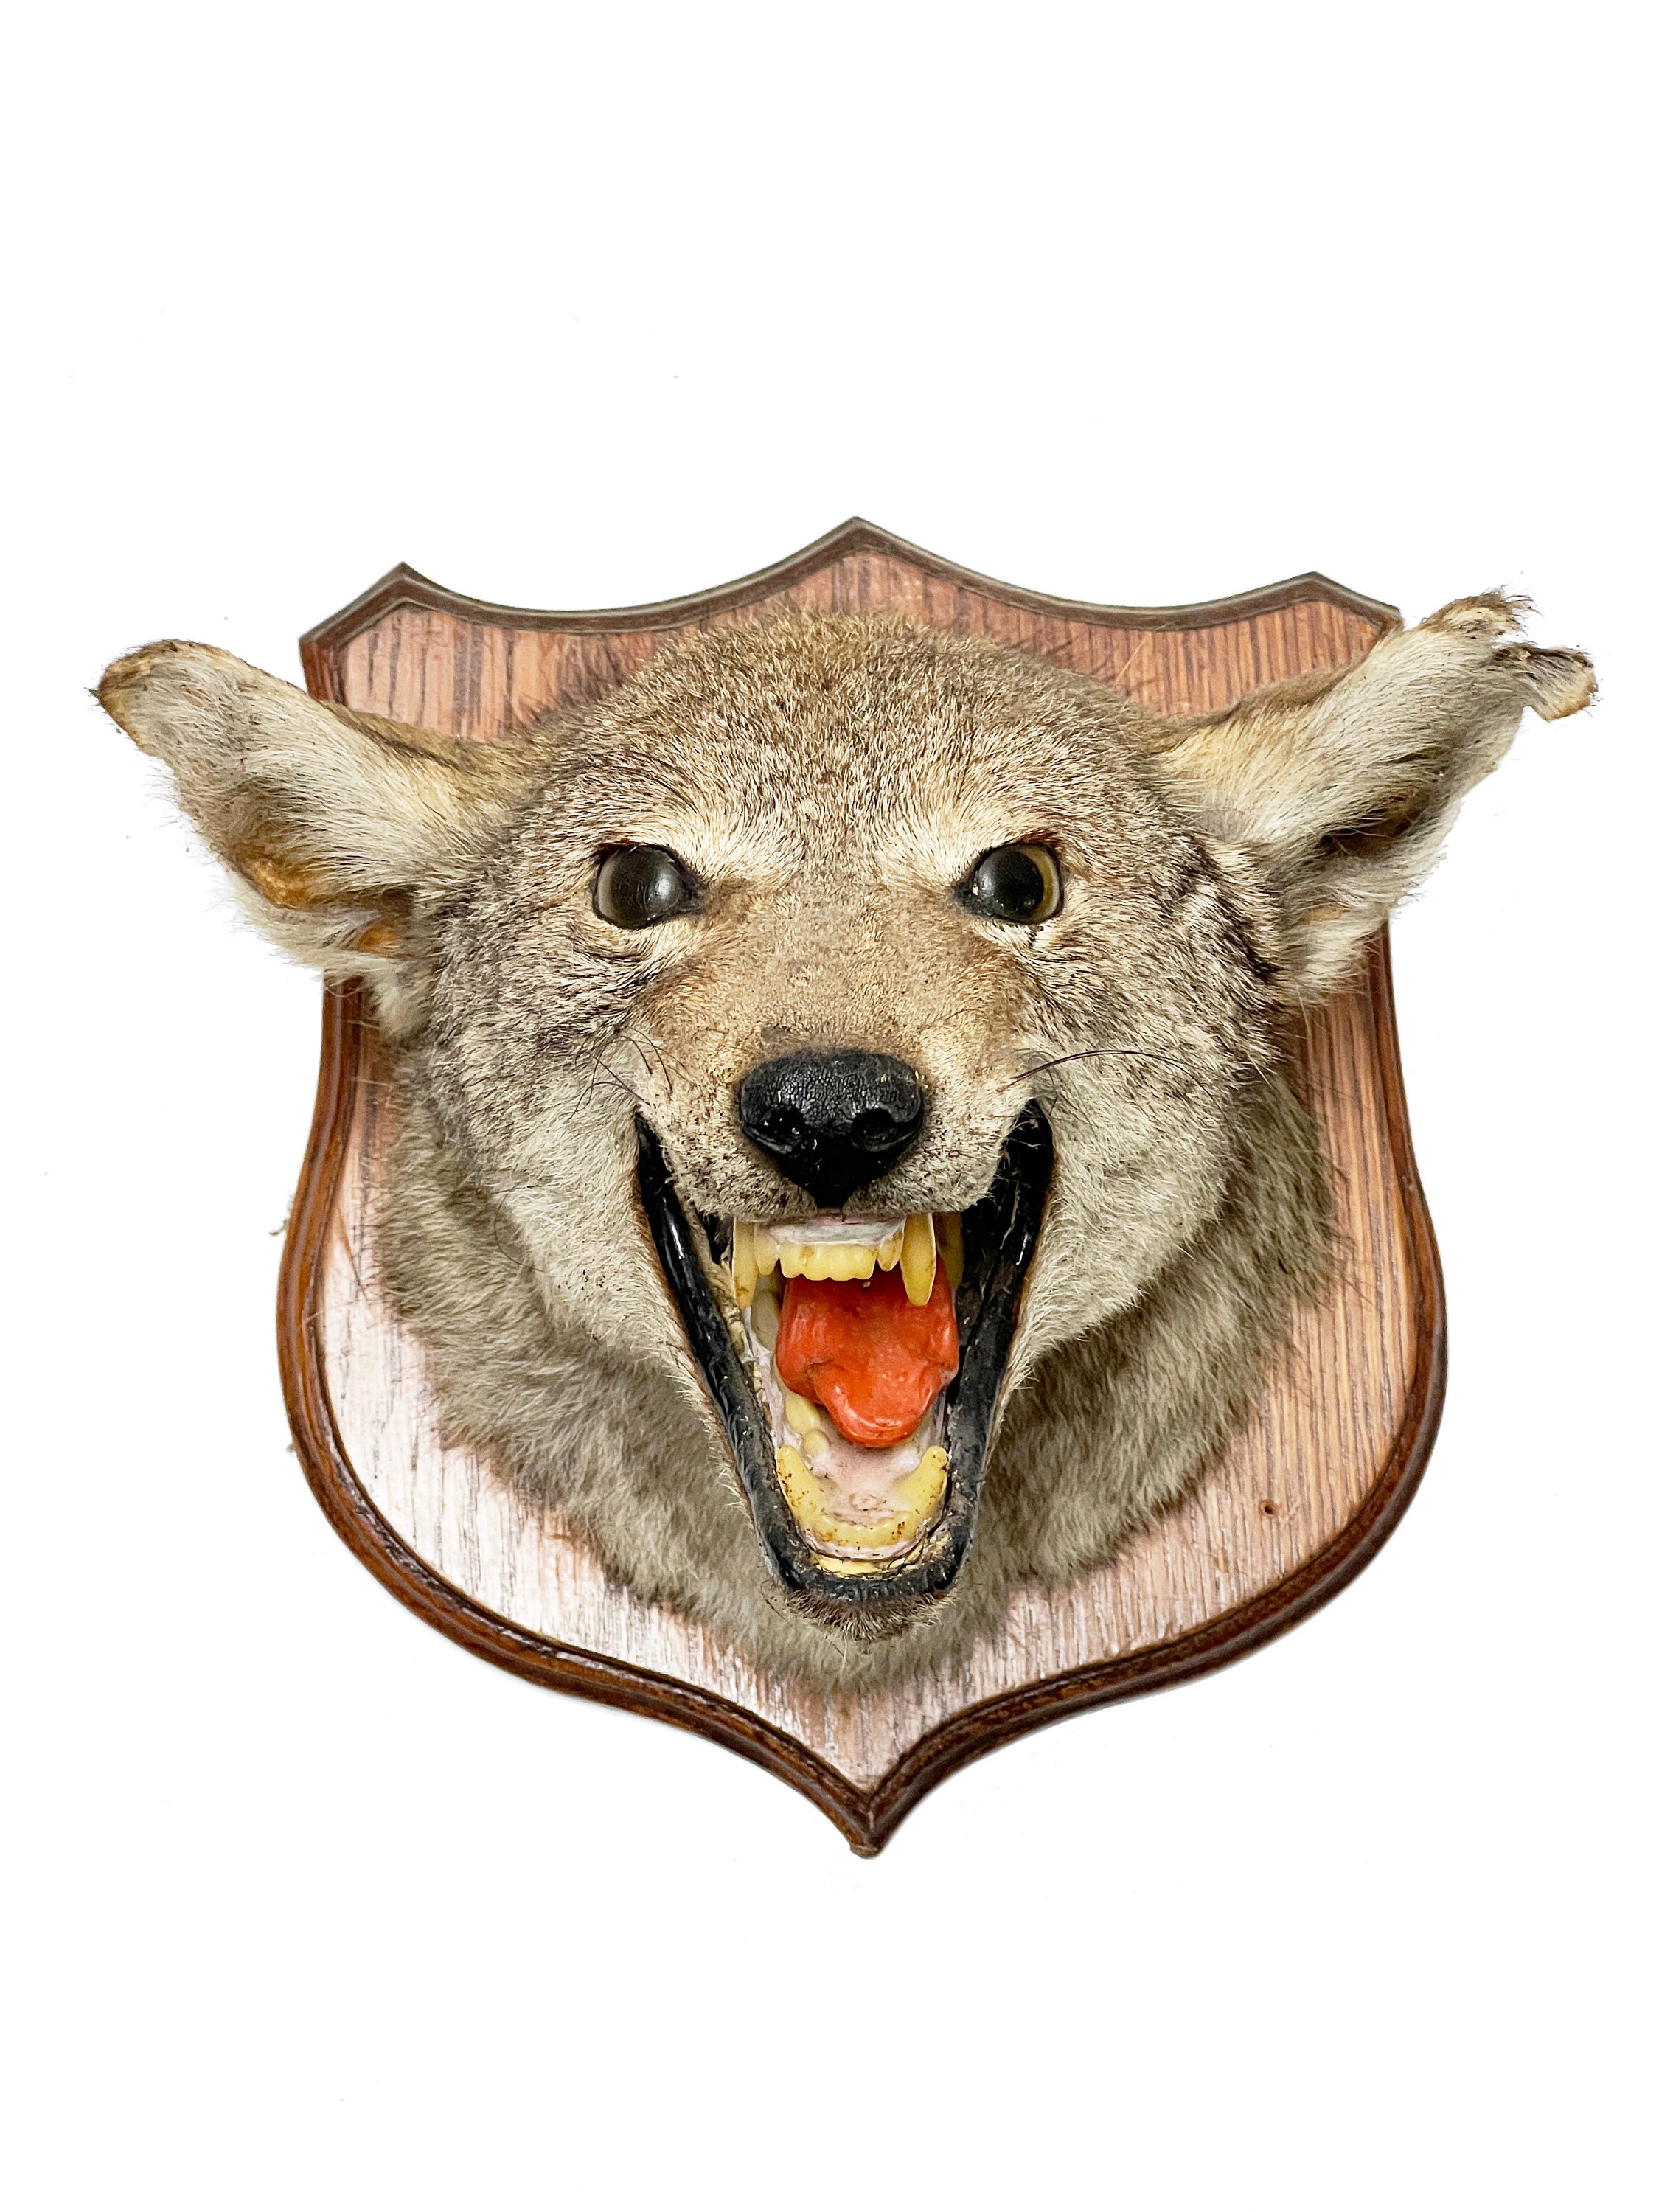 Howling coyote wall pedestal - Wildlife Addictions Taxidermy